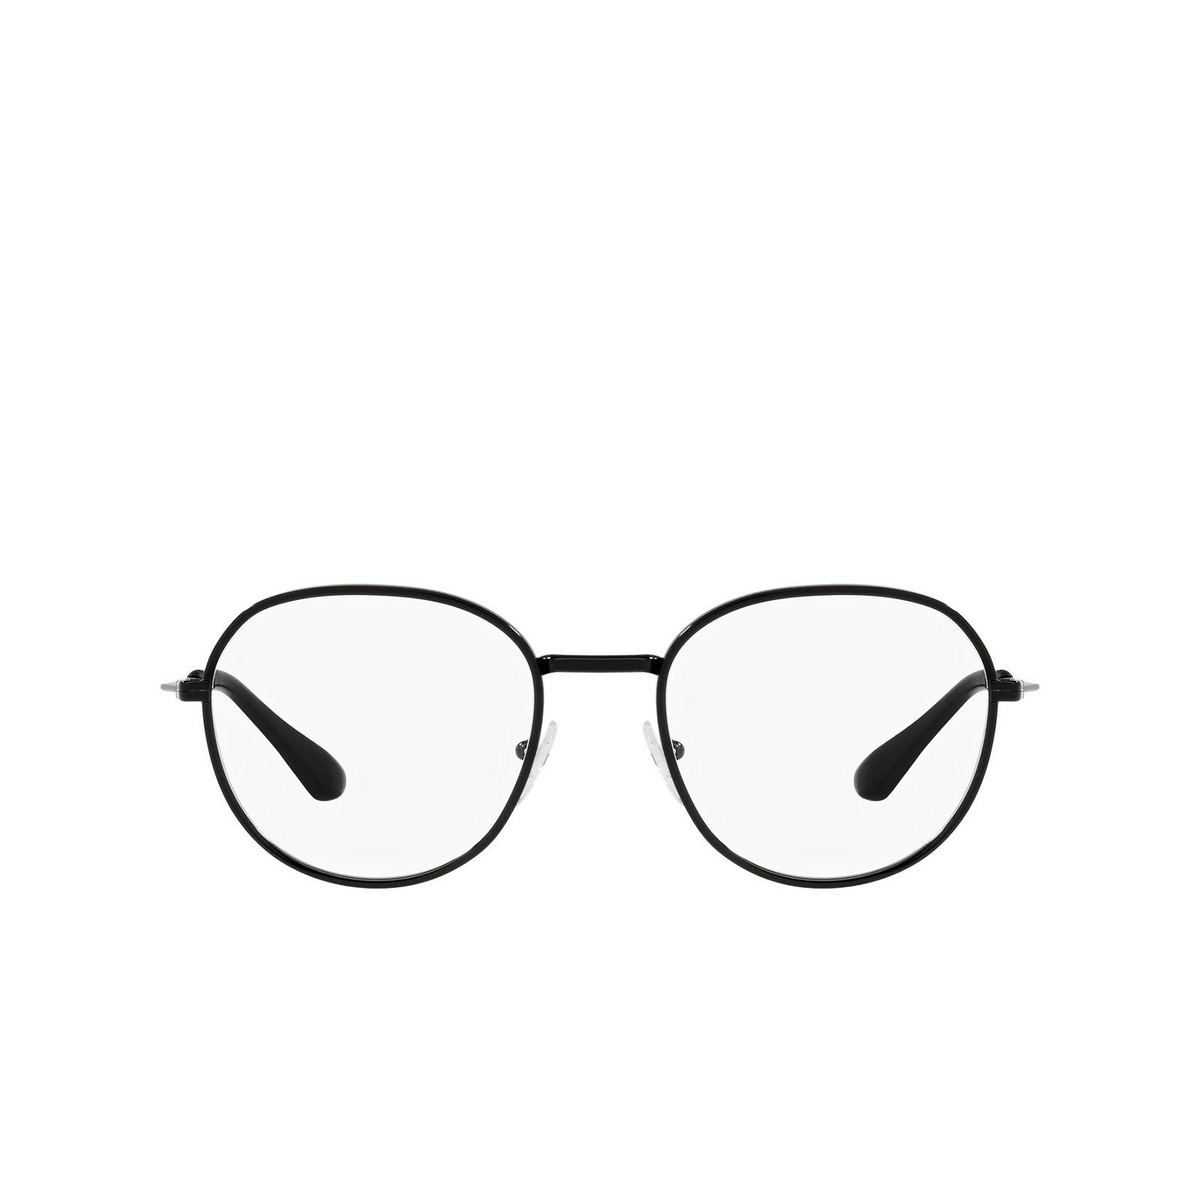 Prada® Oval Eyeglasses: PR 65WV color Matte Black 1BO1O1 - front view.